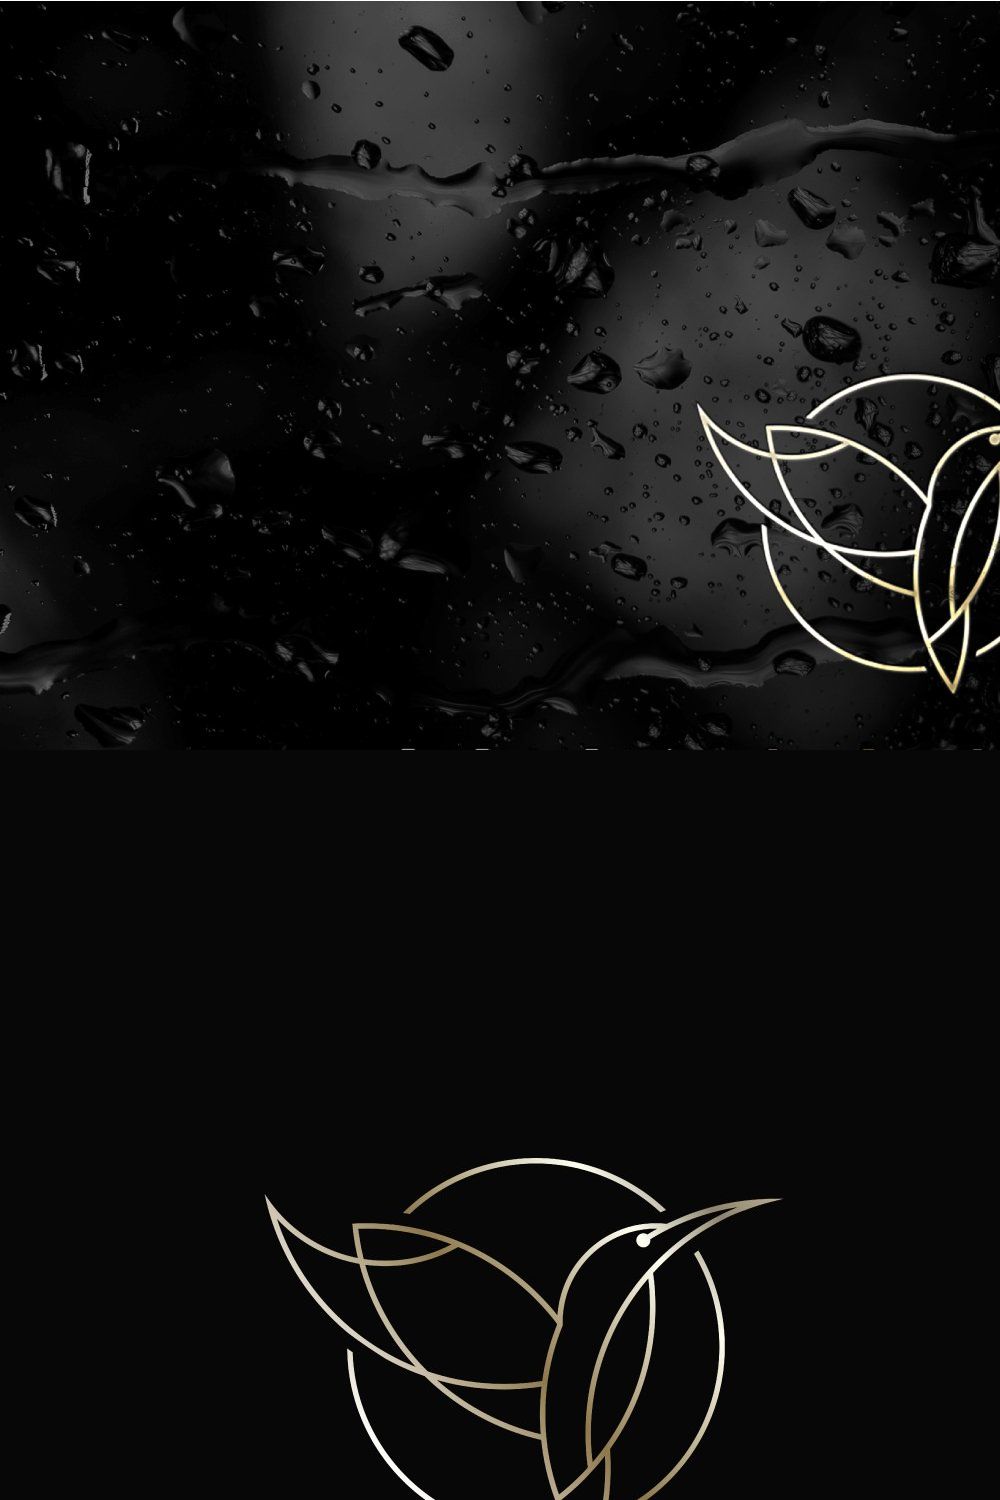 Humming Bird logo pinterest preview image.